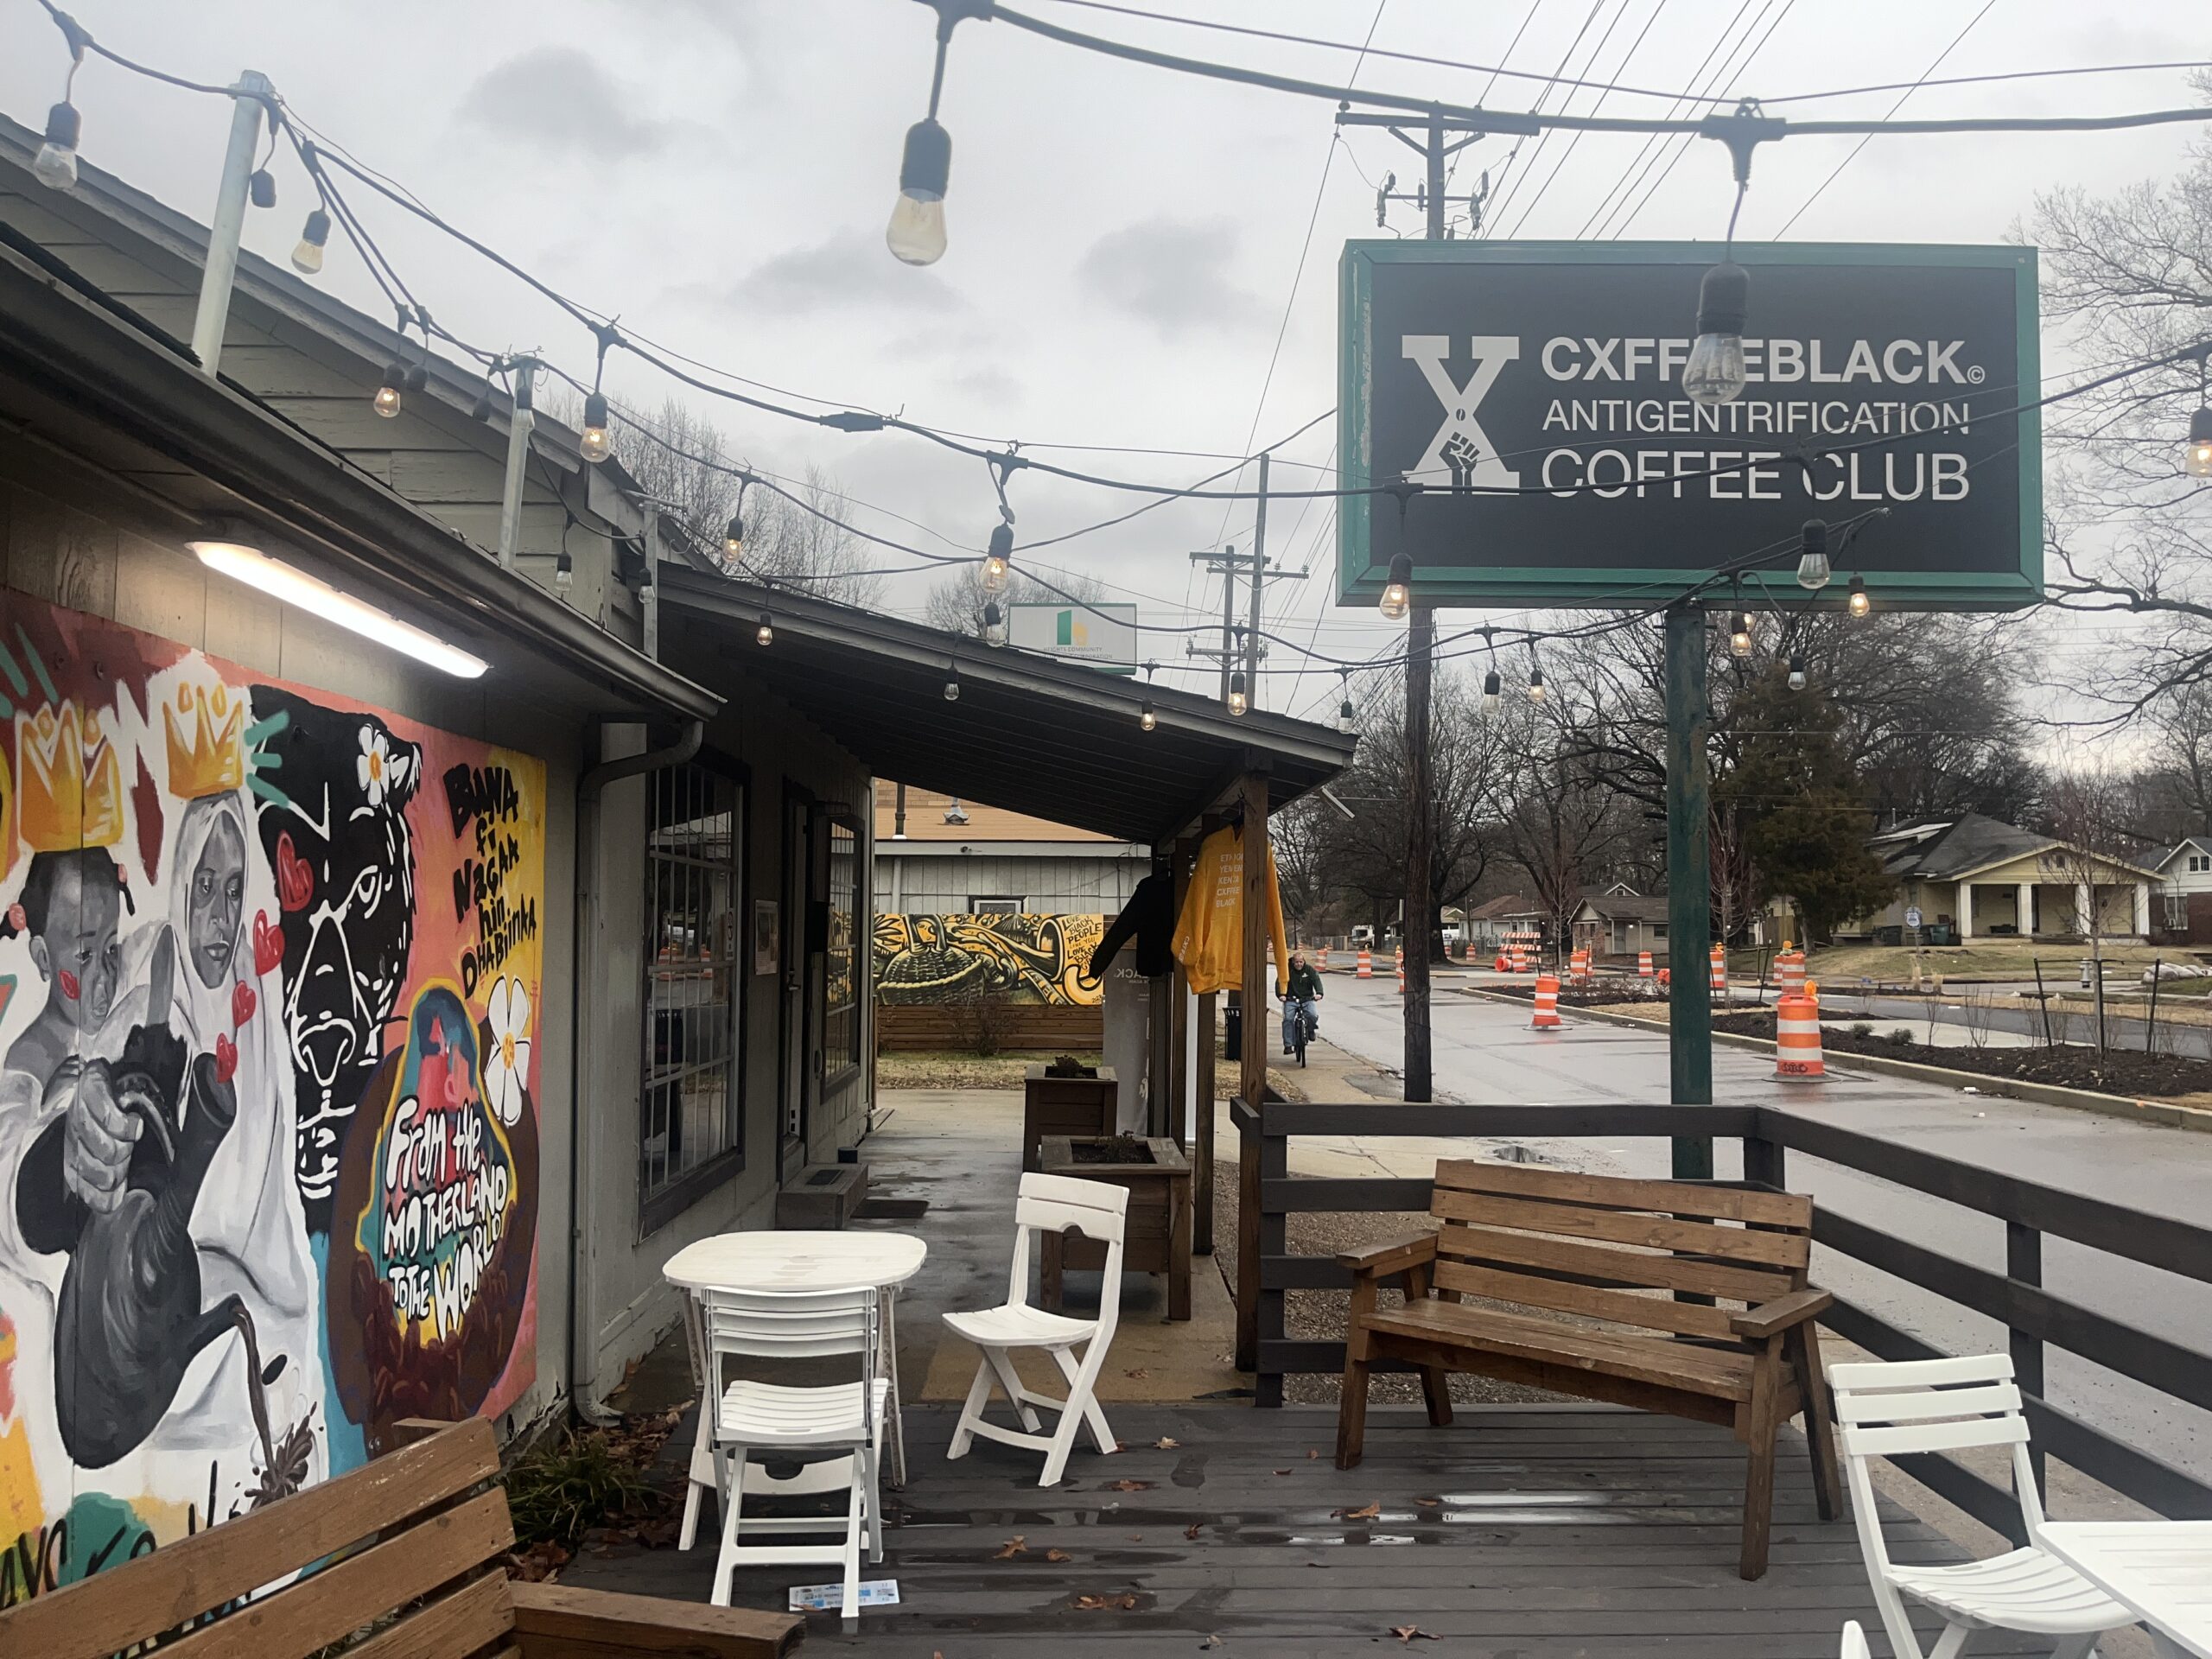 Some Like It Black: Cxffeeblack Celebrates Coffee and Black Culture in Memphis